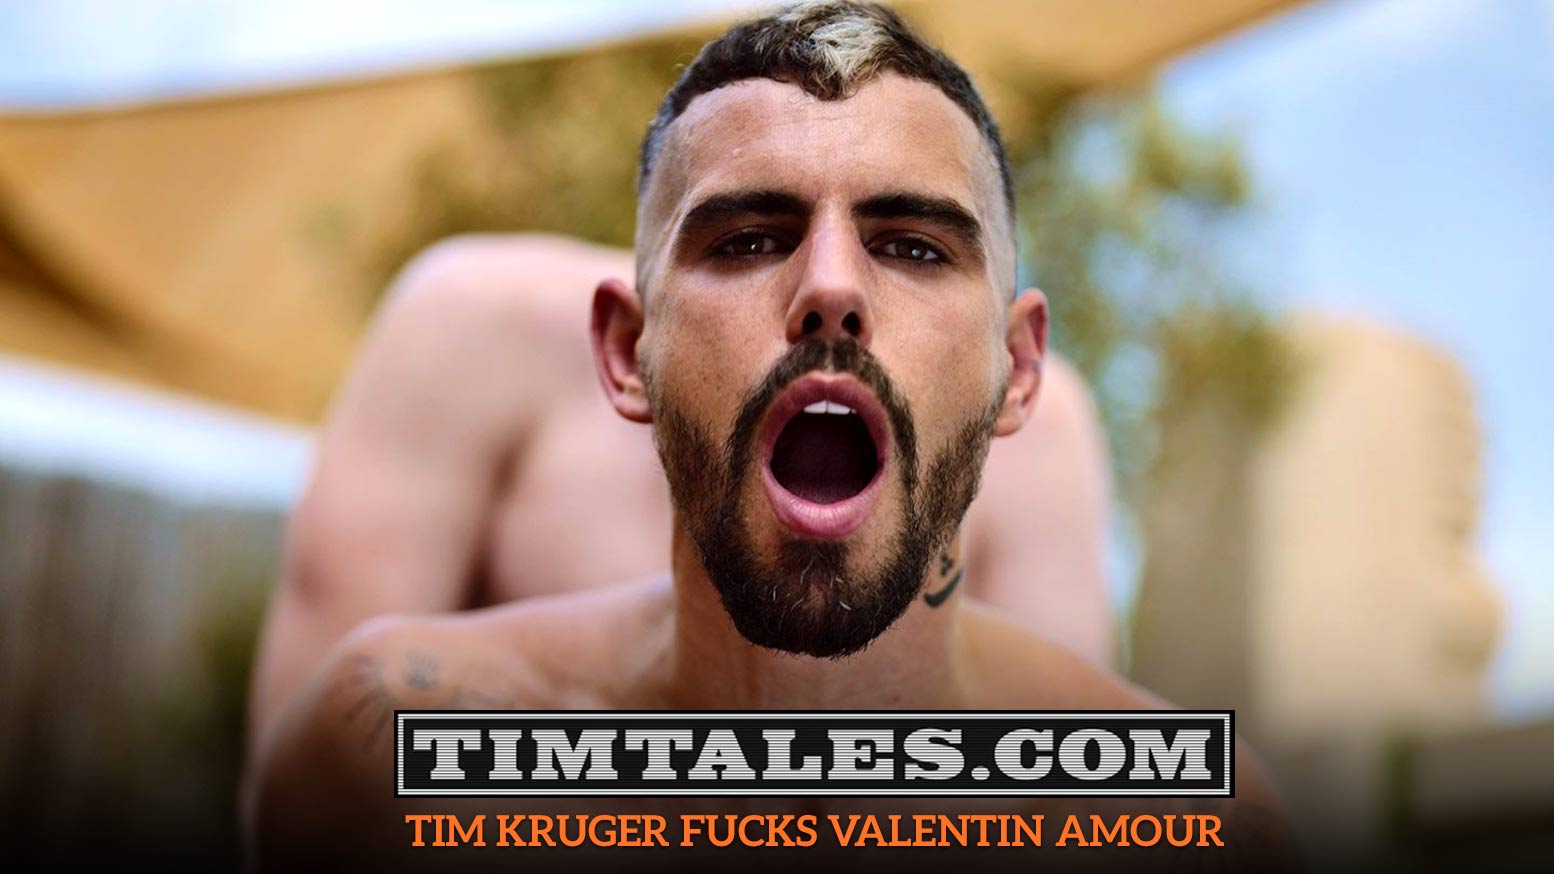 Tim fucks Valentin